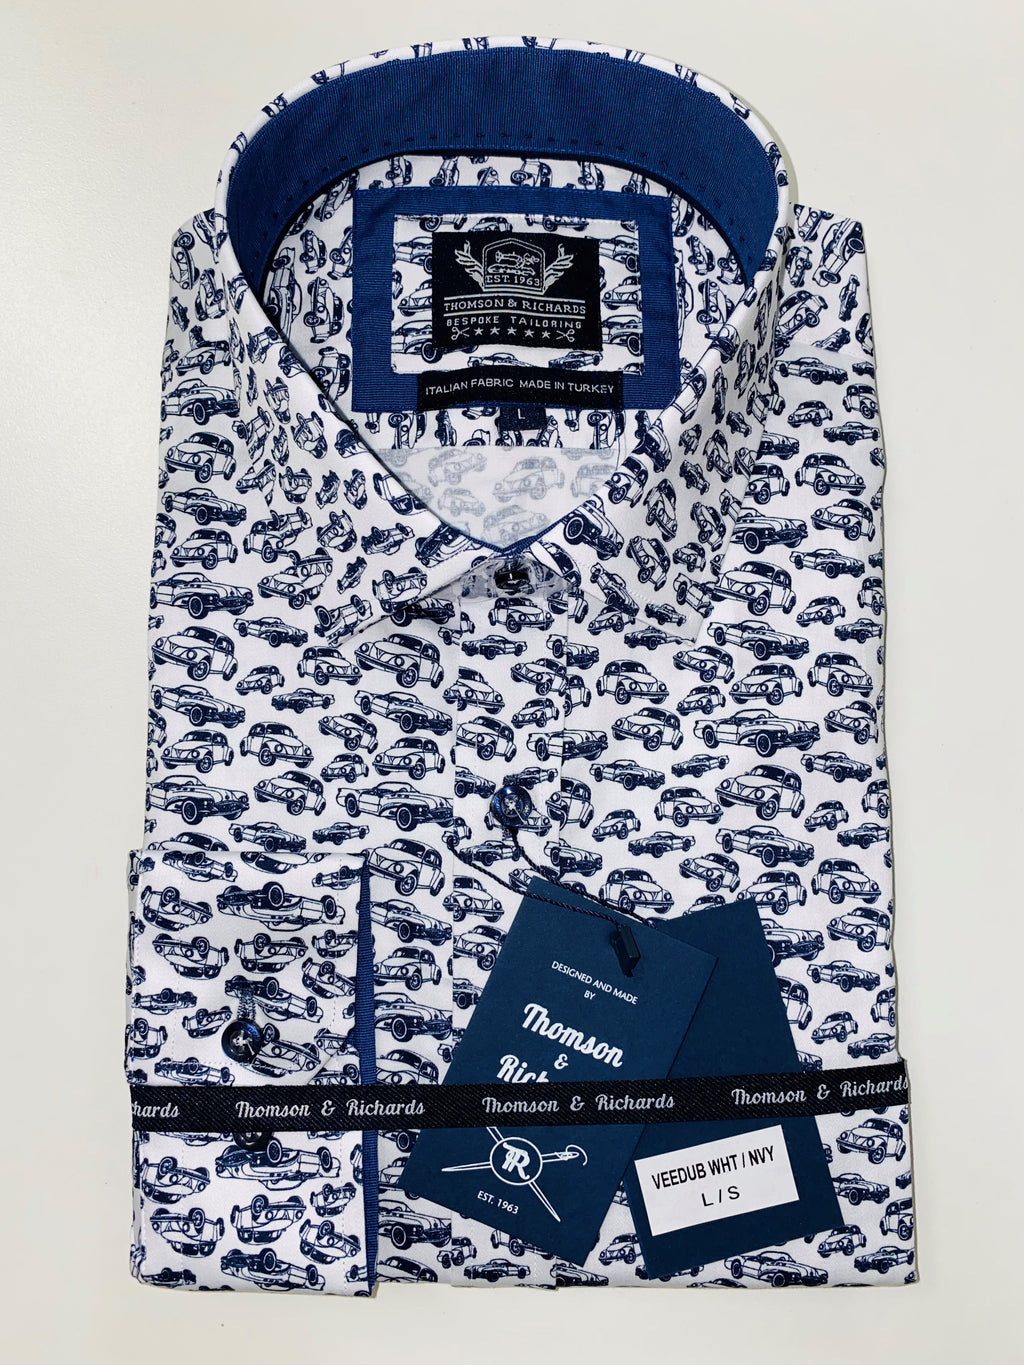 Men's L/S Shirt "Veedub" - White/Navy